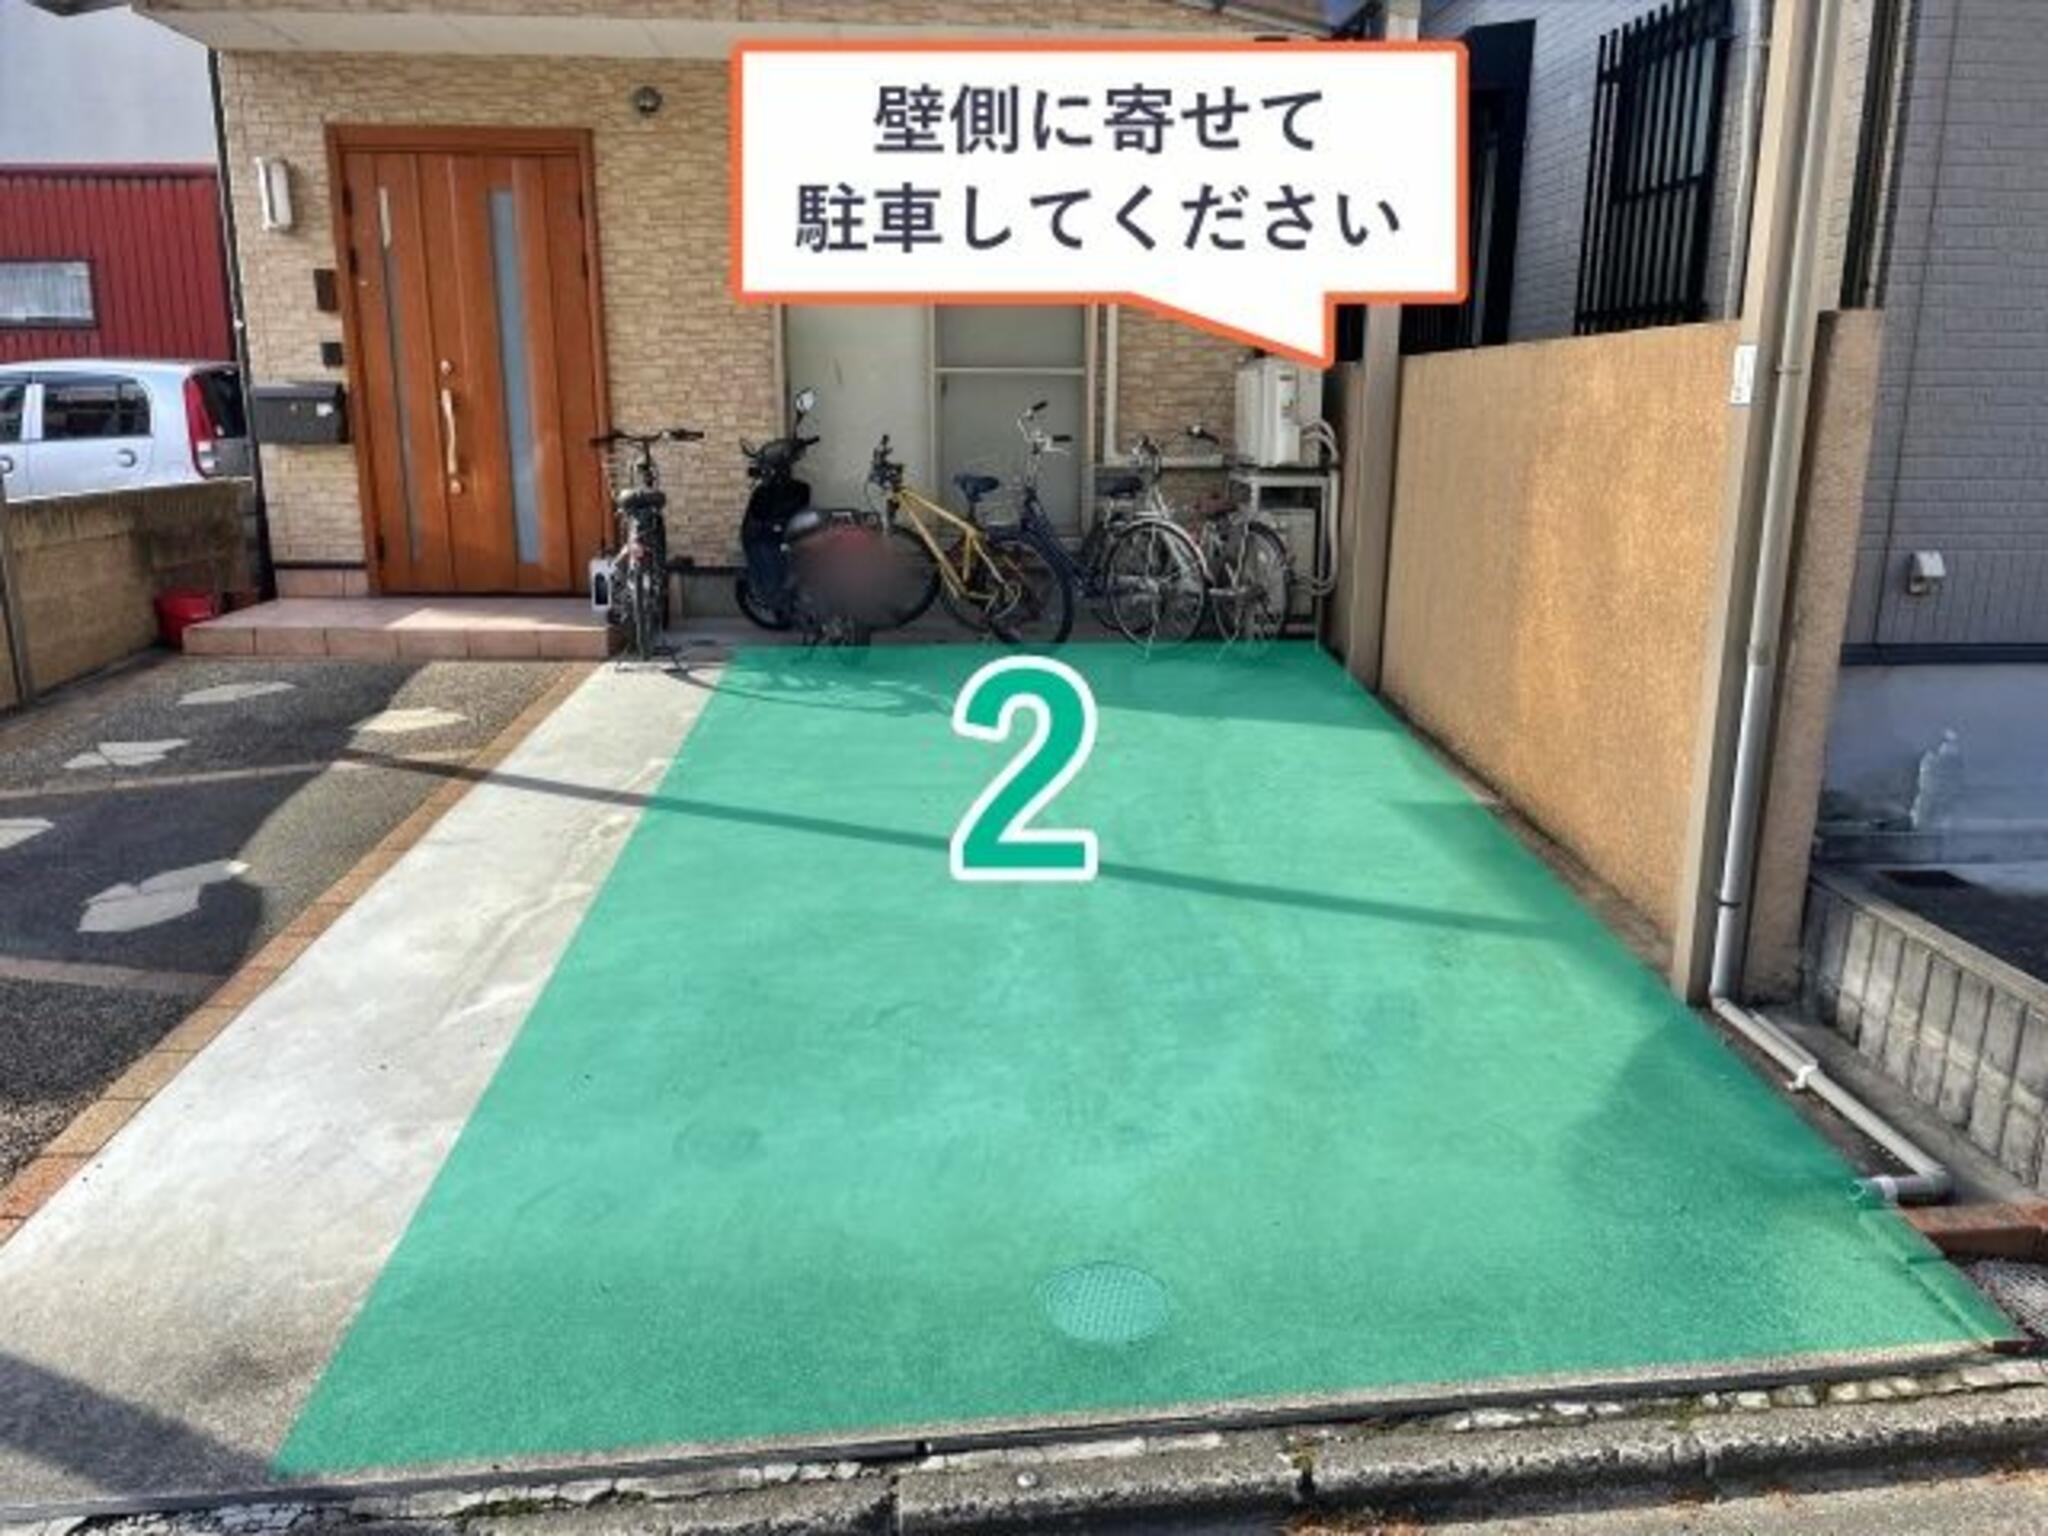 akippa駐車場:京都府京都市上京区西町97の代表写真3